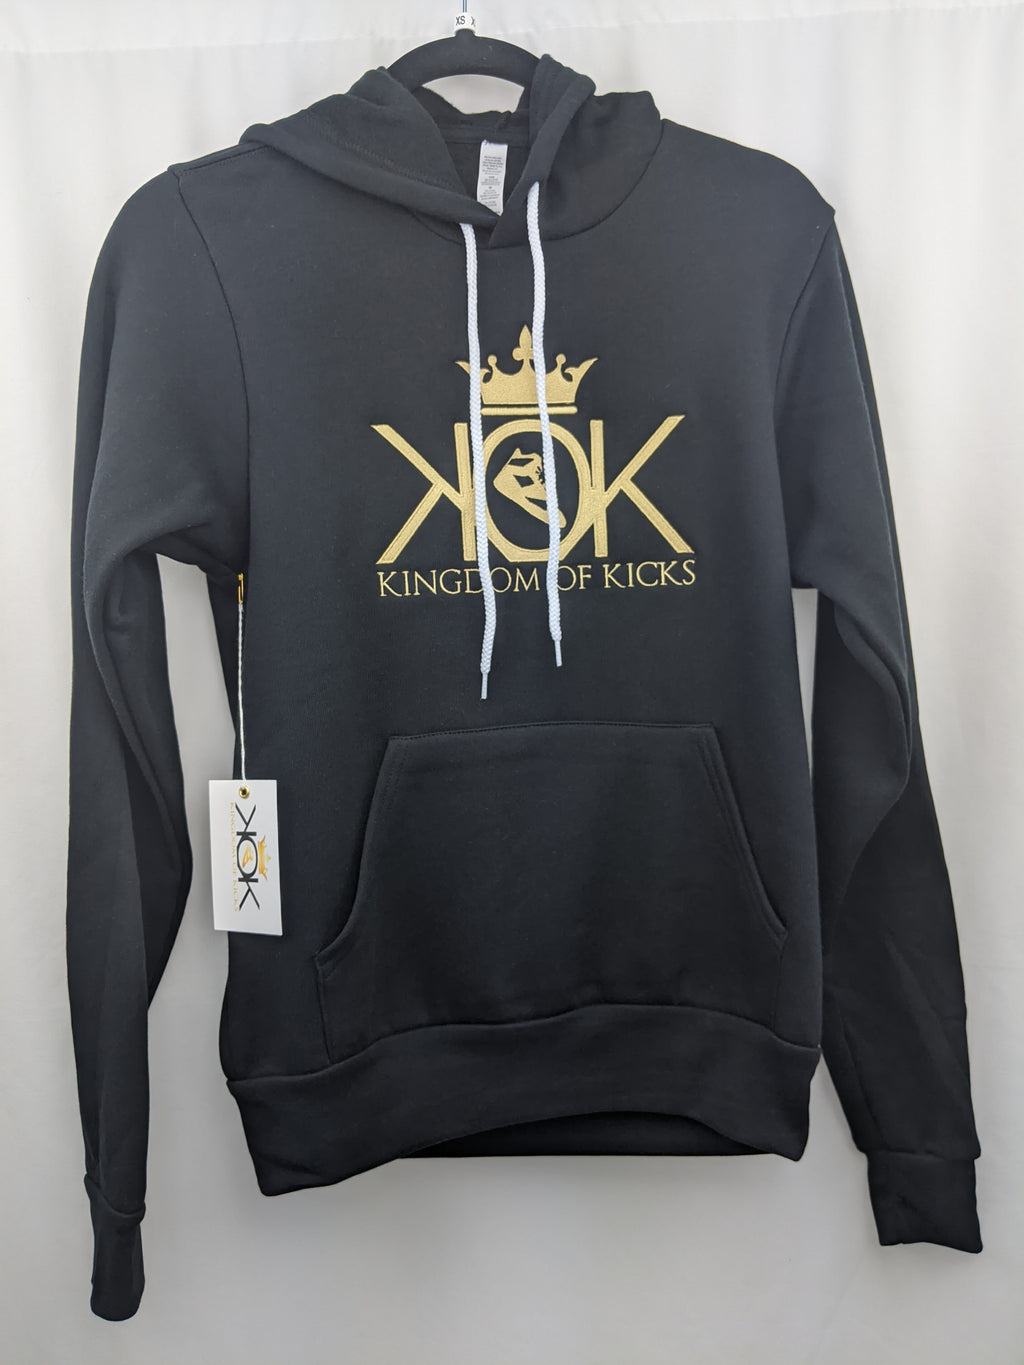 KOK Black/Metallic Gold Hoodie Embroidered